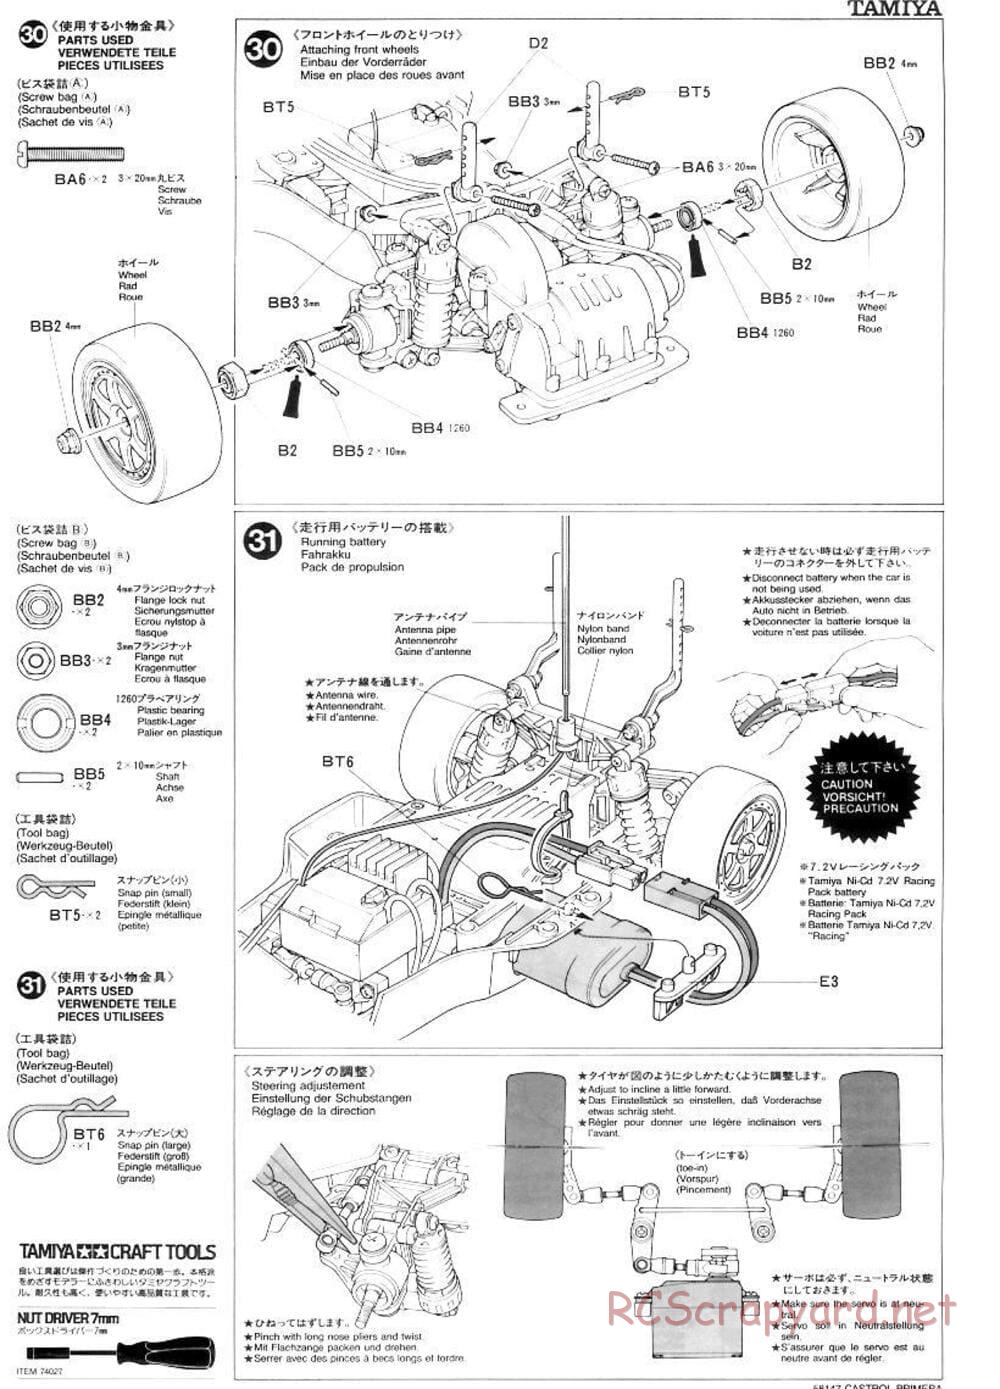 Tamiya - Castrol Nissan Primera JTCC - FF-01 Chassis - Manual - Page 15